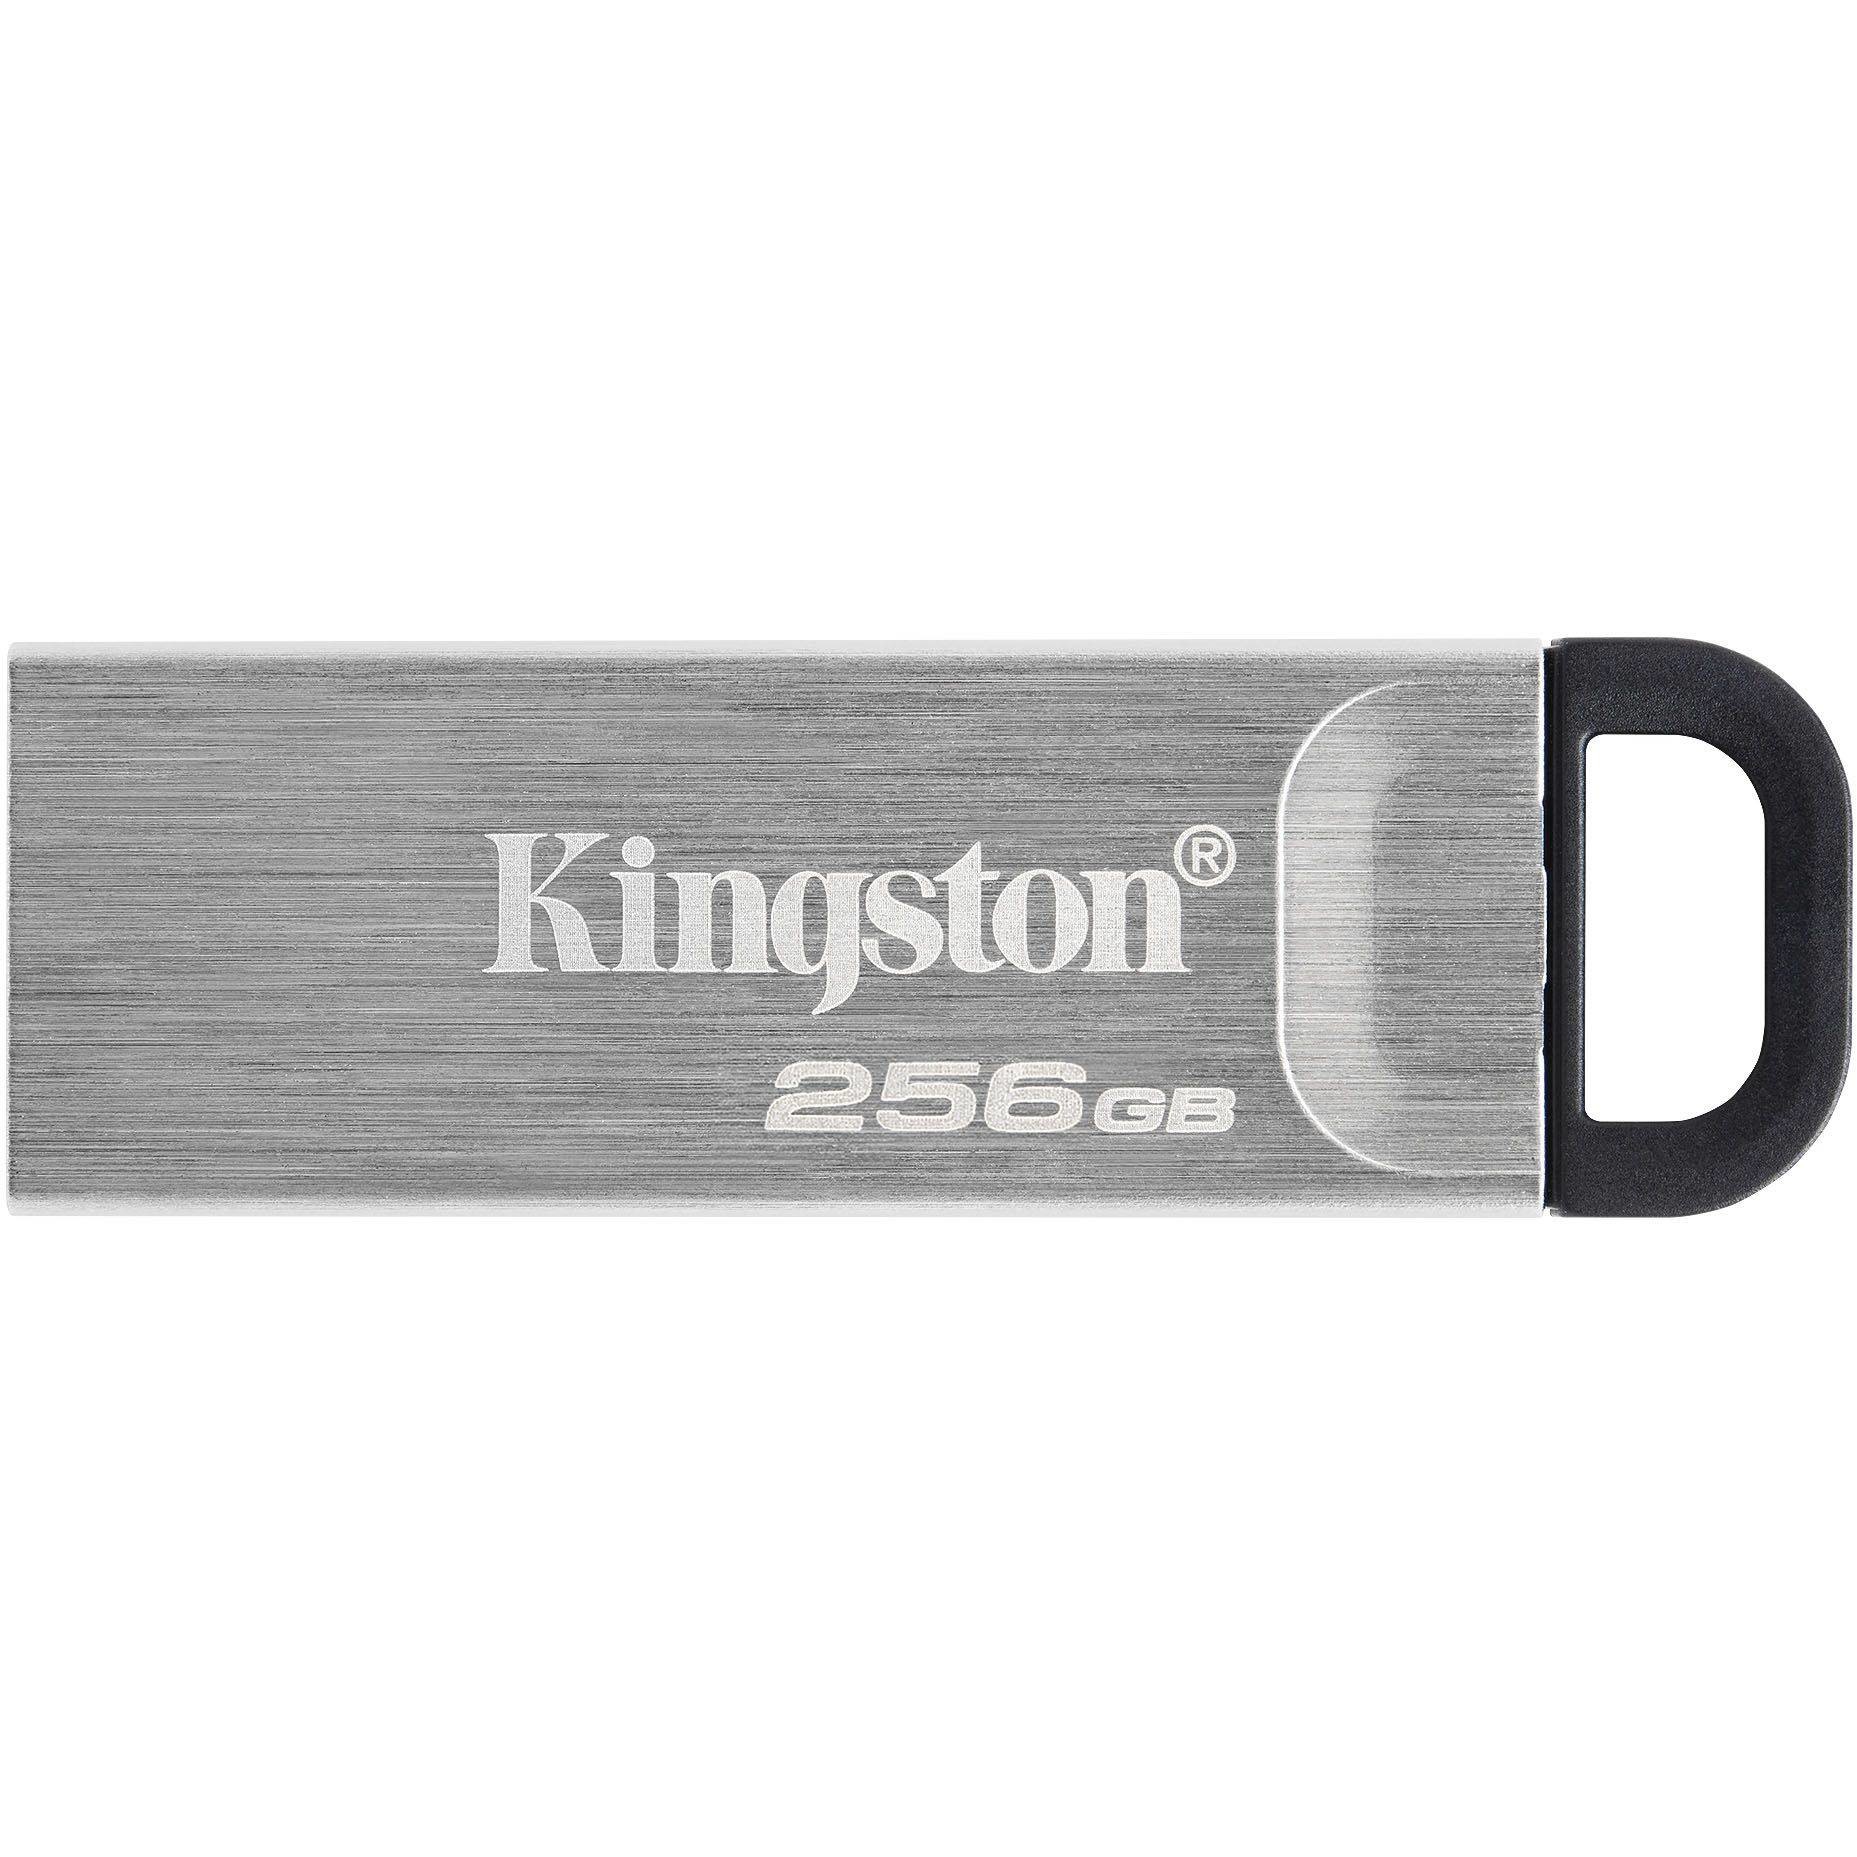 STICK 256GB USB 3.2 Kingston DataTraveler Kyson Silver